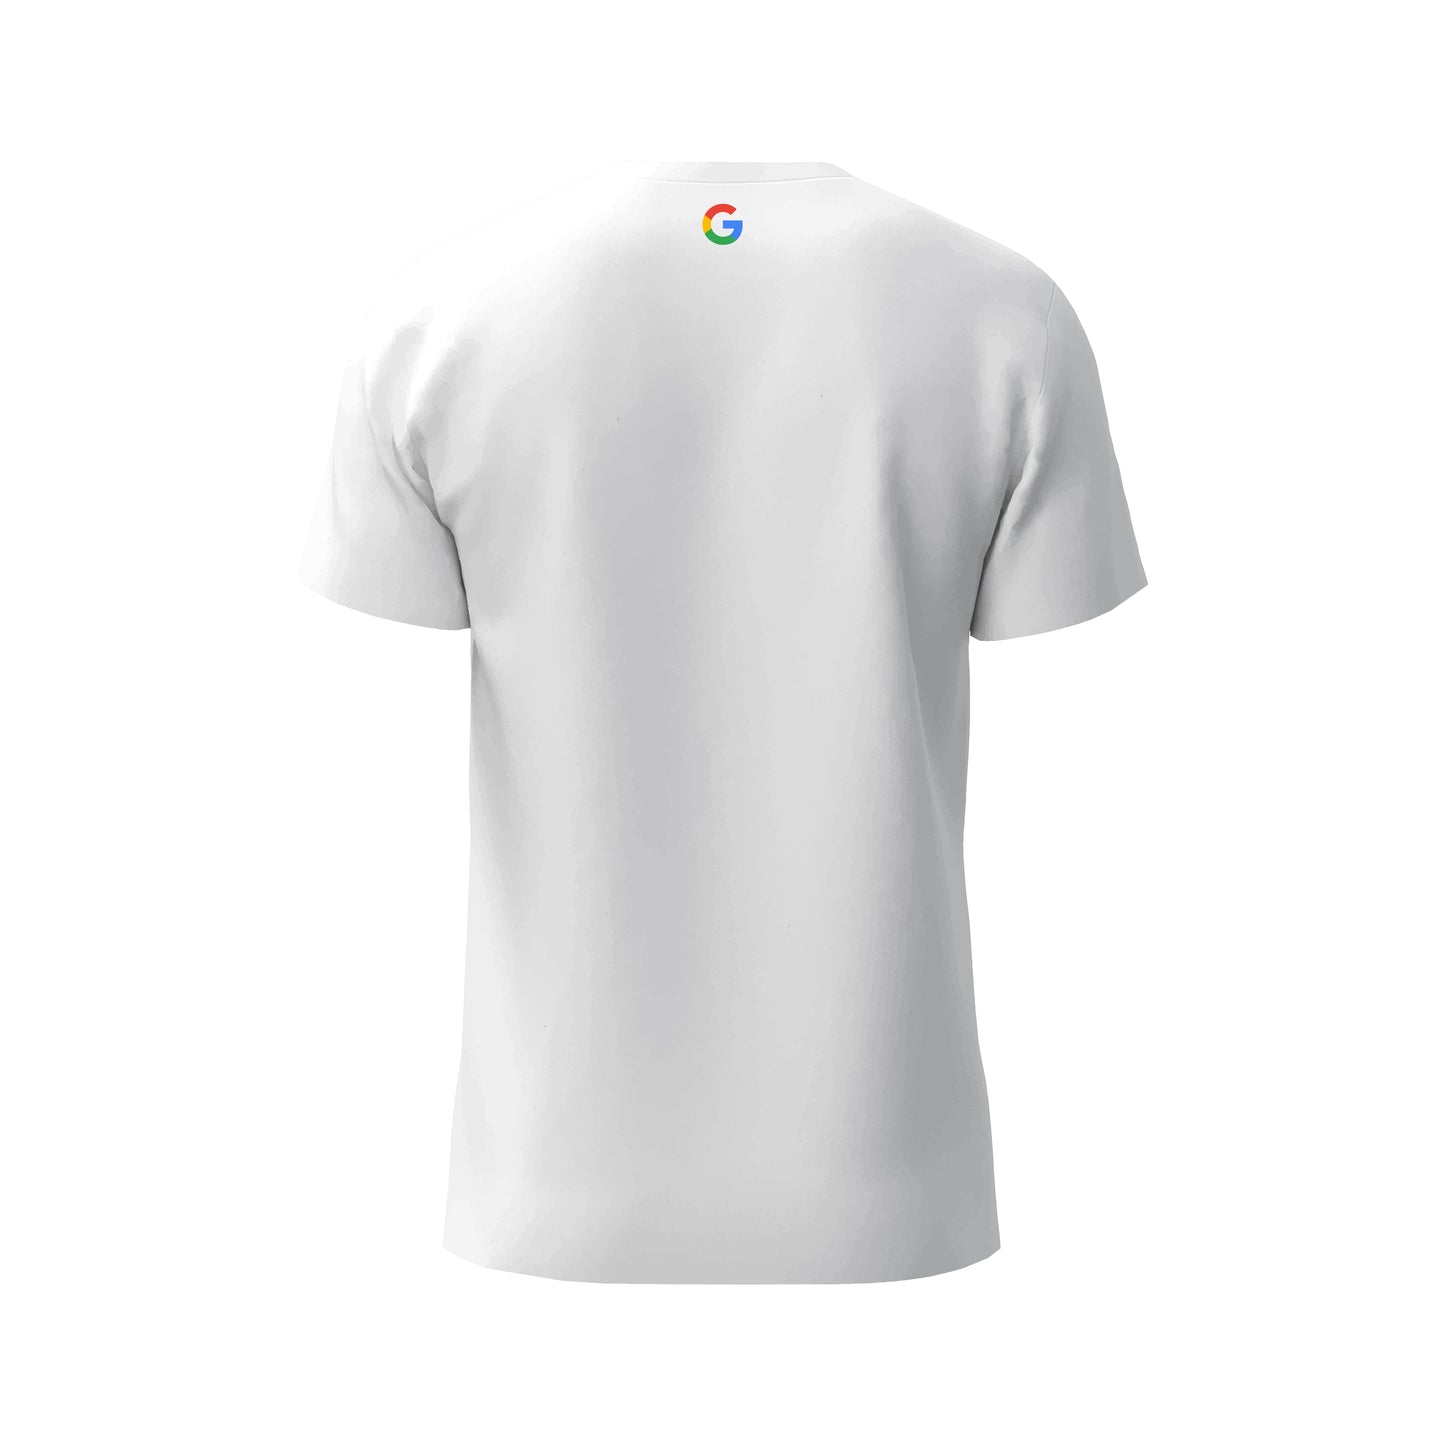 Google - T-Shirt - Modèle 1